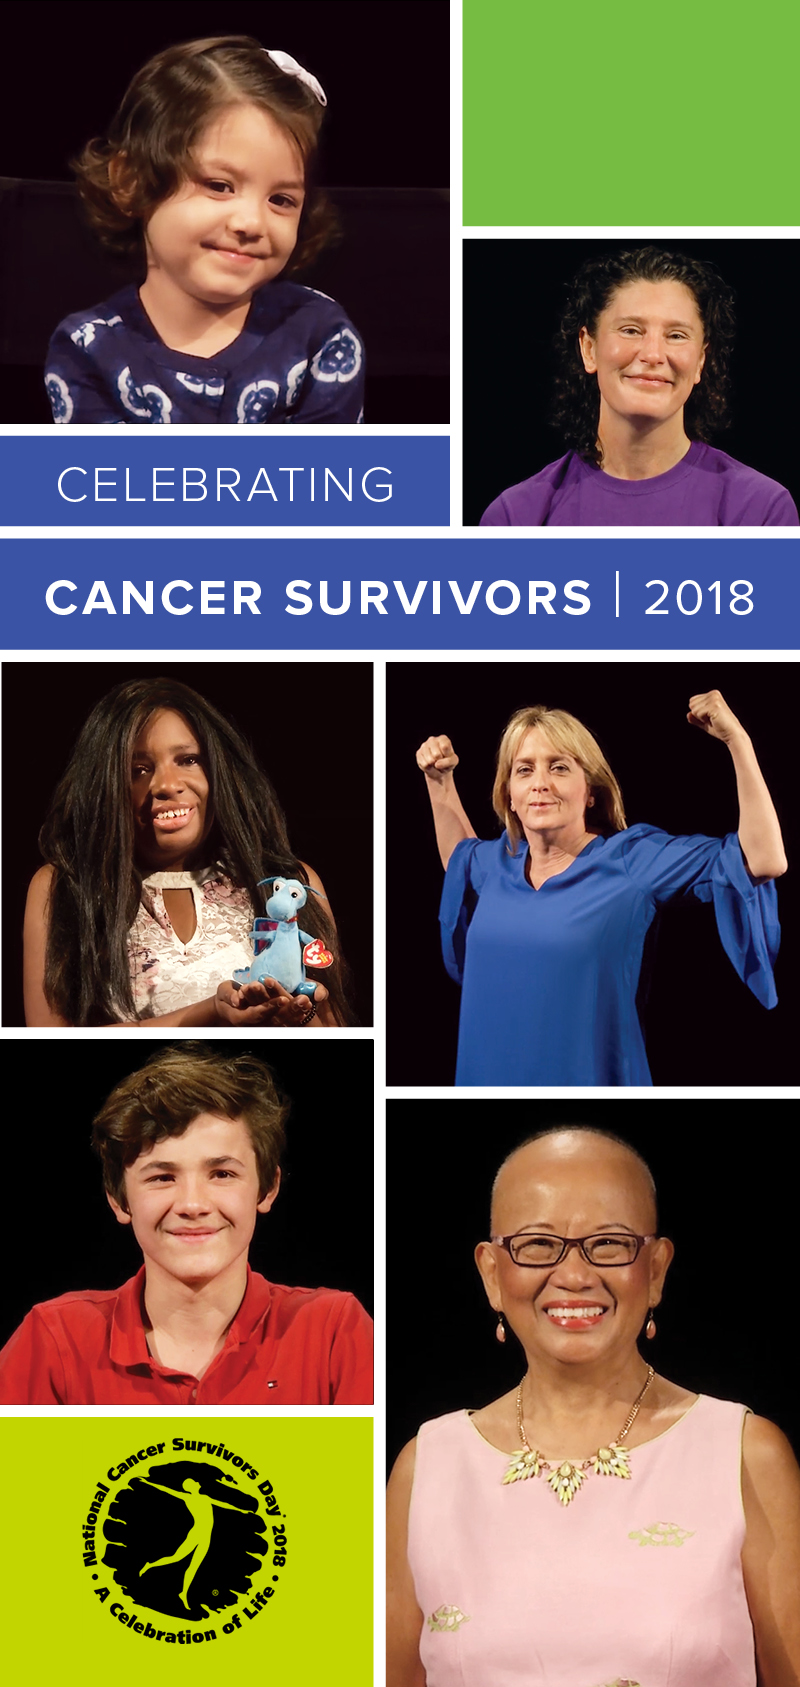 Celebrating cancer survivors 2018 graphic